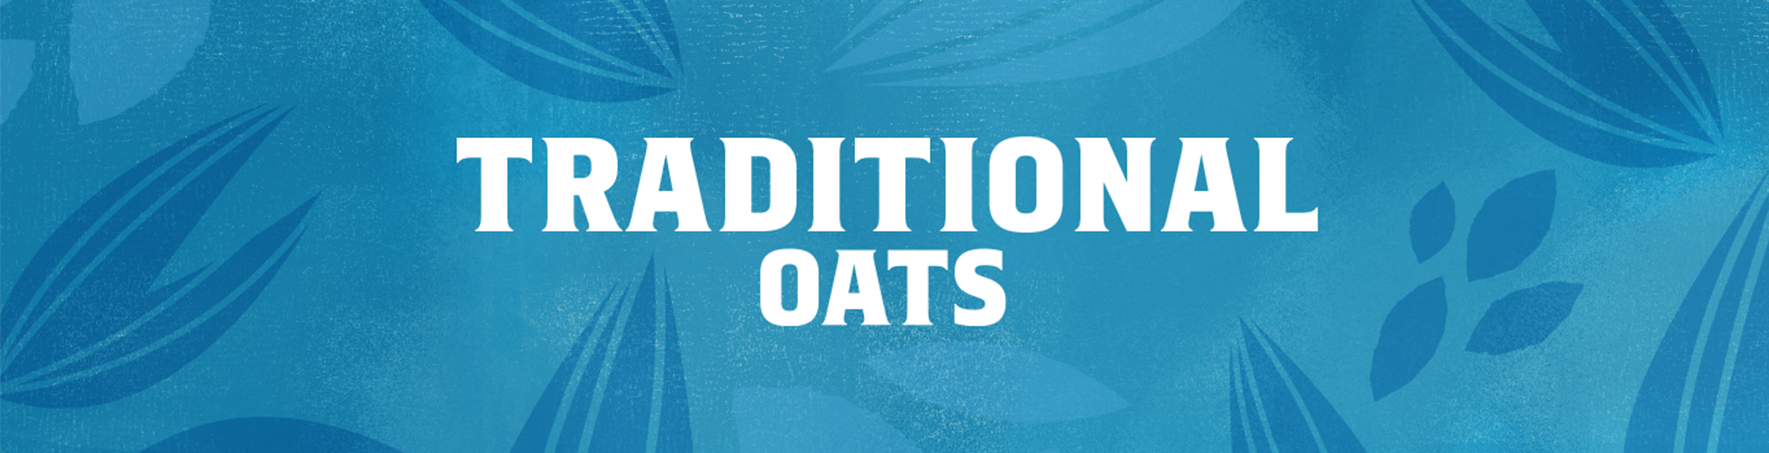 Traditional oats